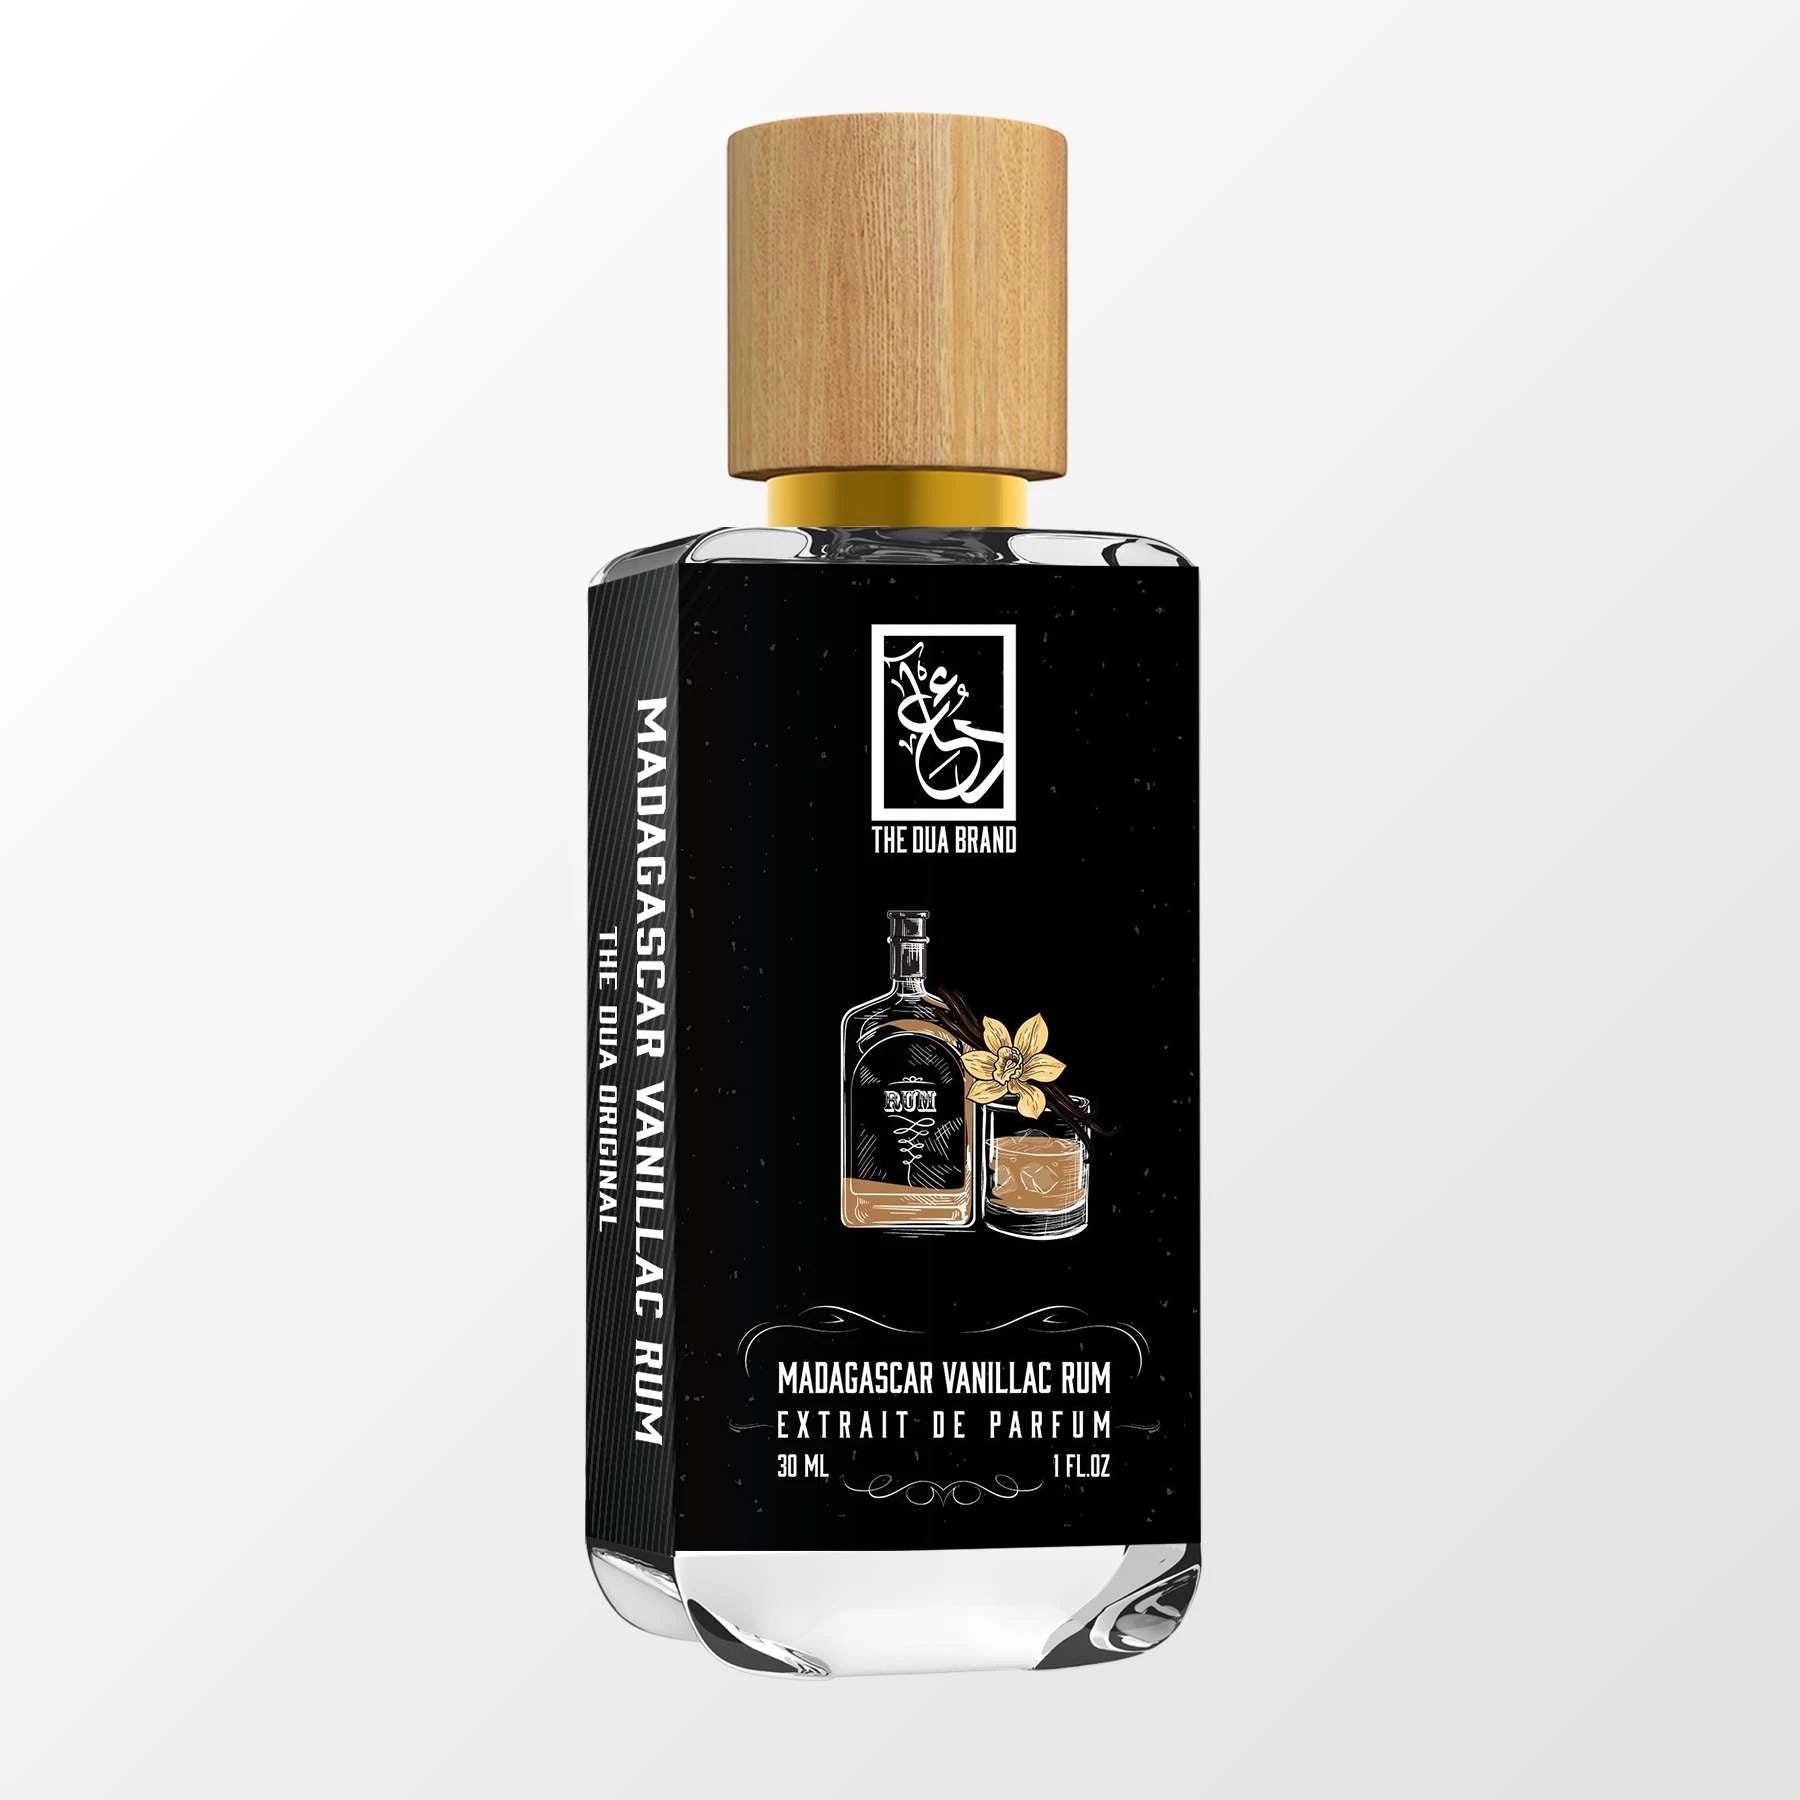 Madagascar Vanillac Rum - DUA FRAGRANCES - Gourmand - Unisex